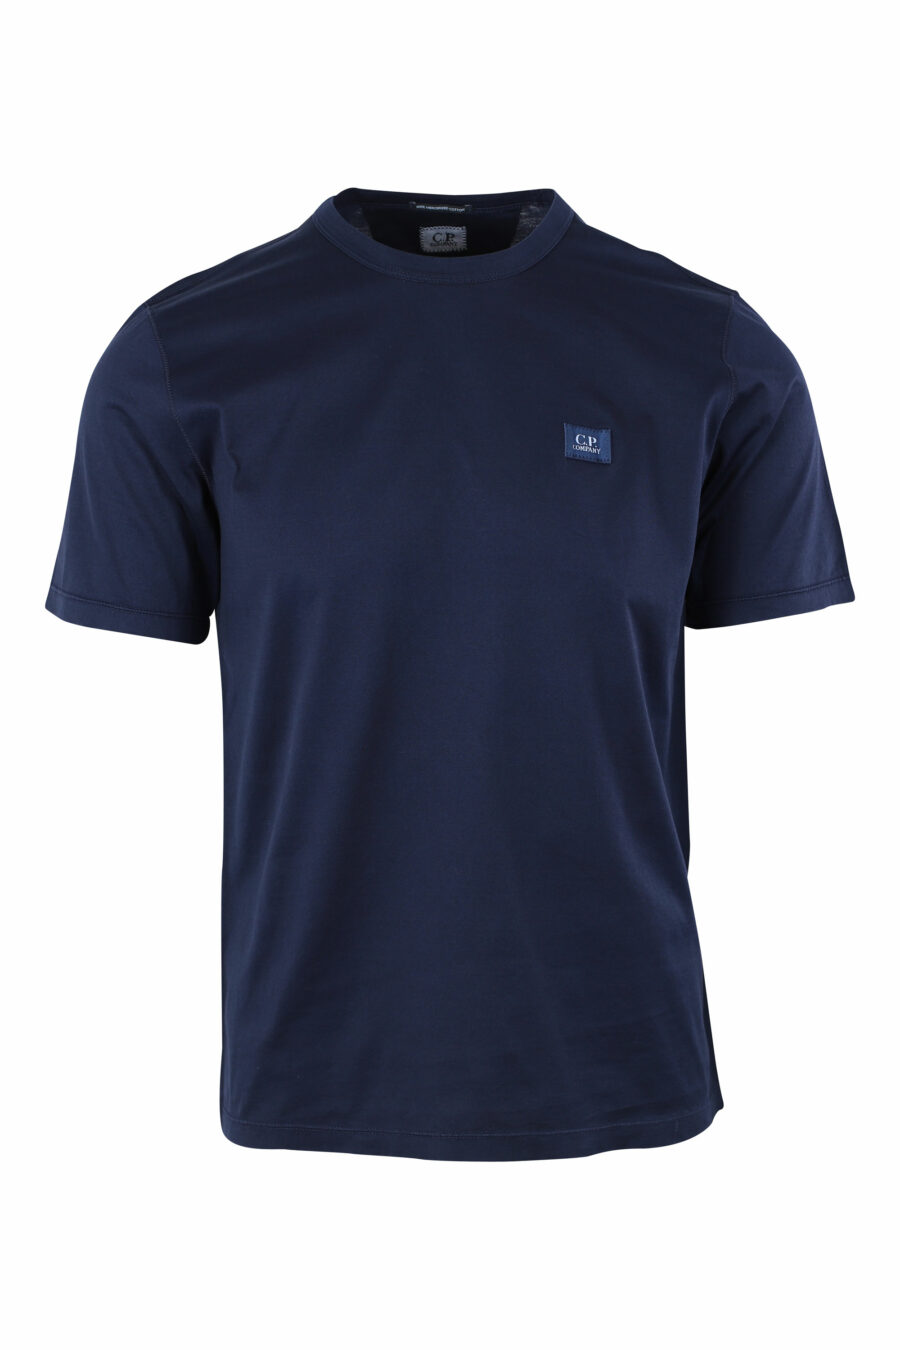 T-shirt azul-escura com mini logótipo - IMG 9651